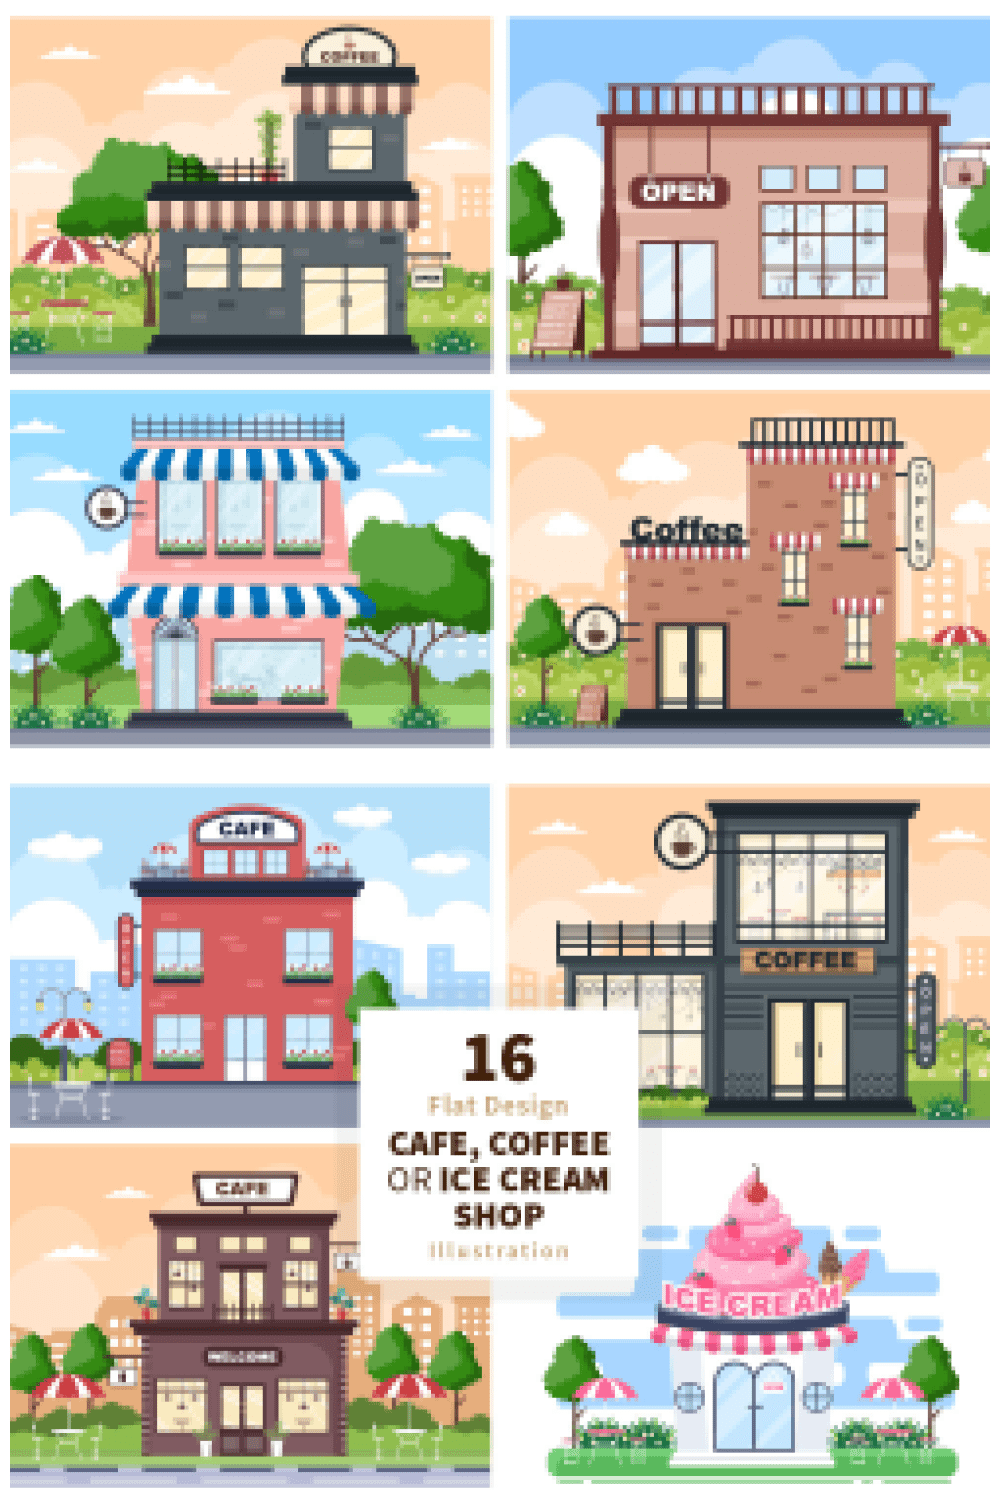 16 Coffeehouse, Cafe or Ice Cream Shop Illustrations - MasterBundles - Pinterest Collage Image.